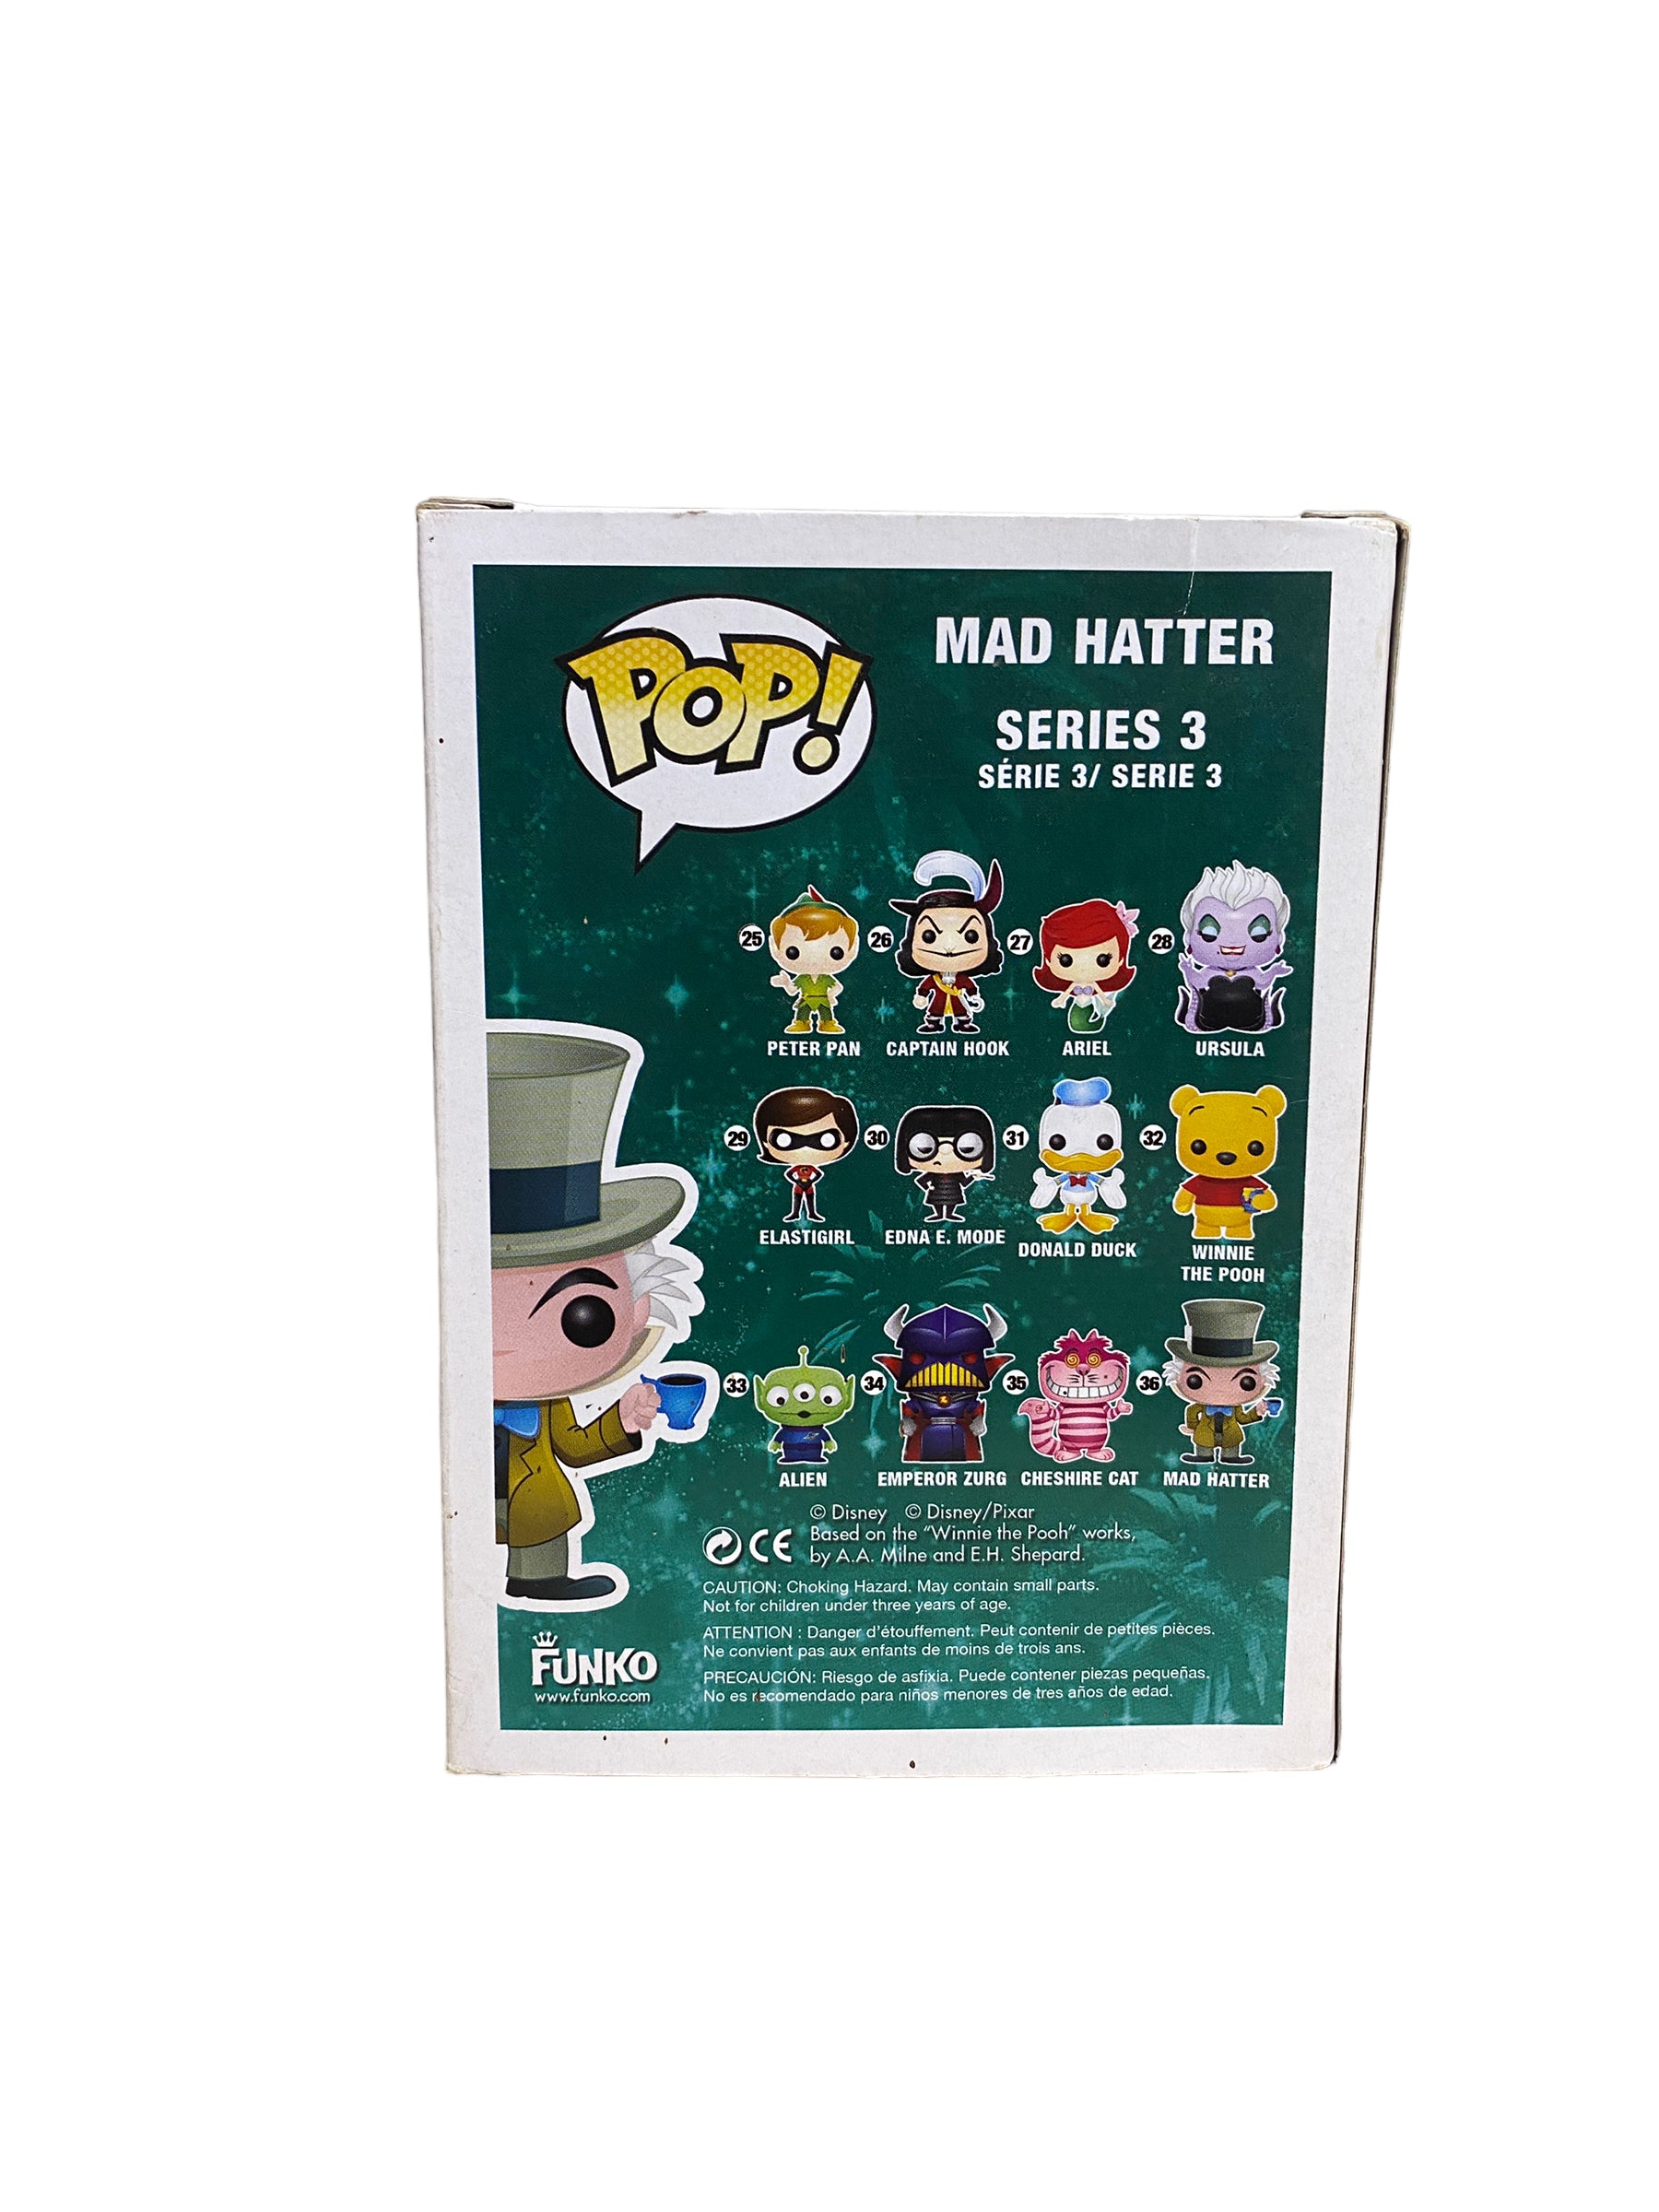 Mad Hatter #36 Funko Pop! - Disney Series 3 - 2012 Pop! - Condition 6.5/10